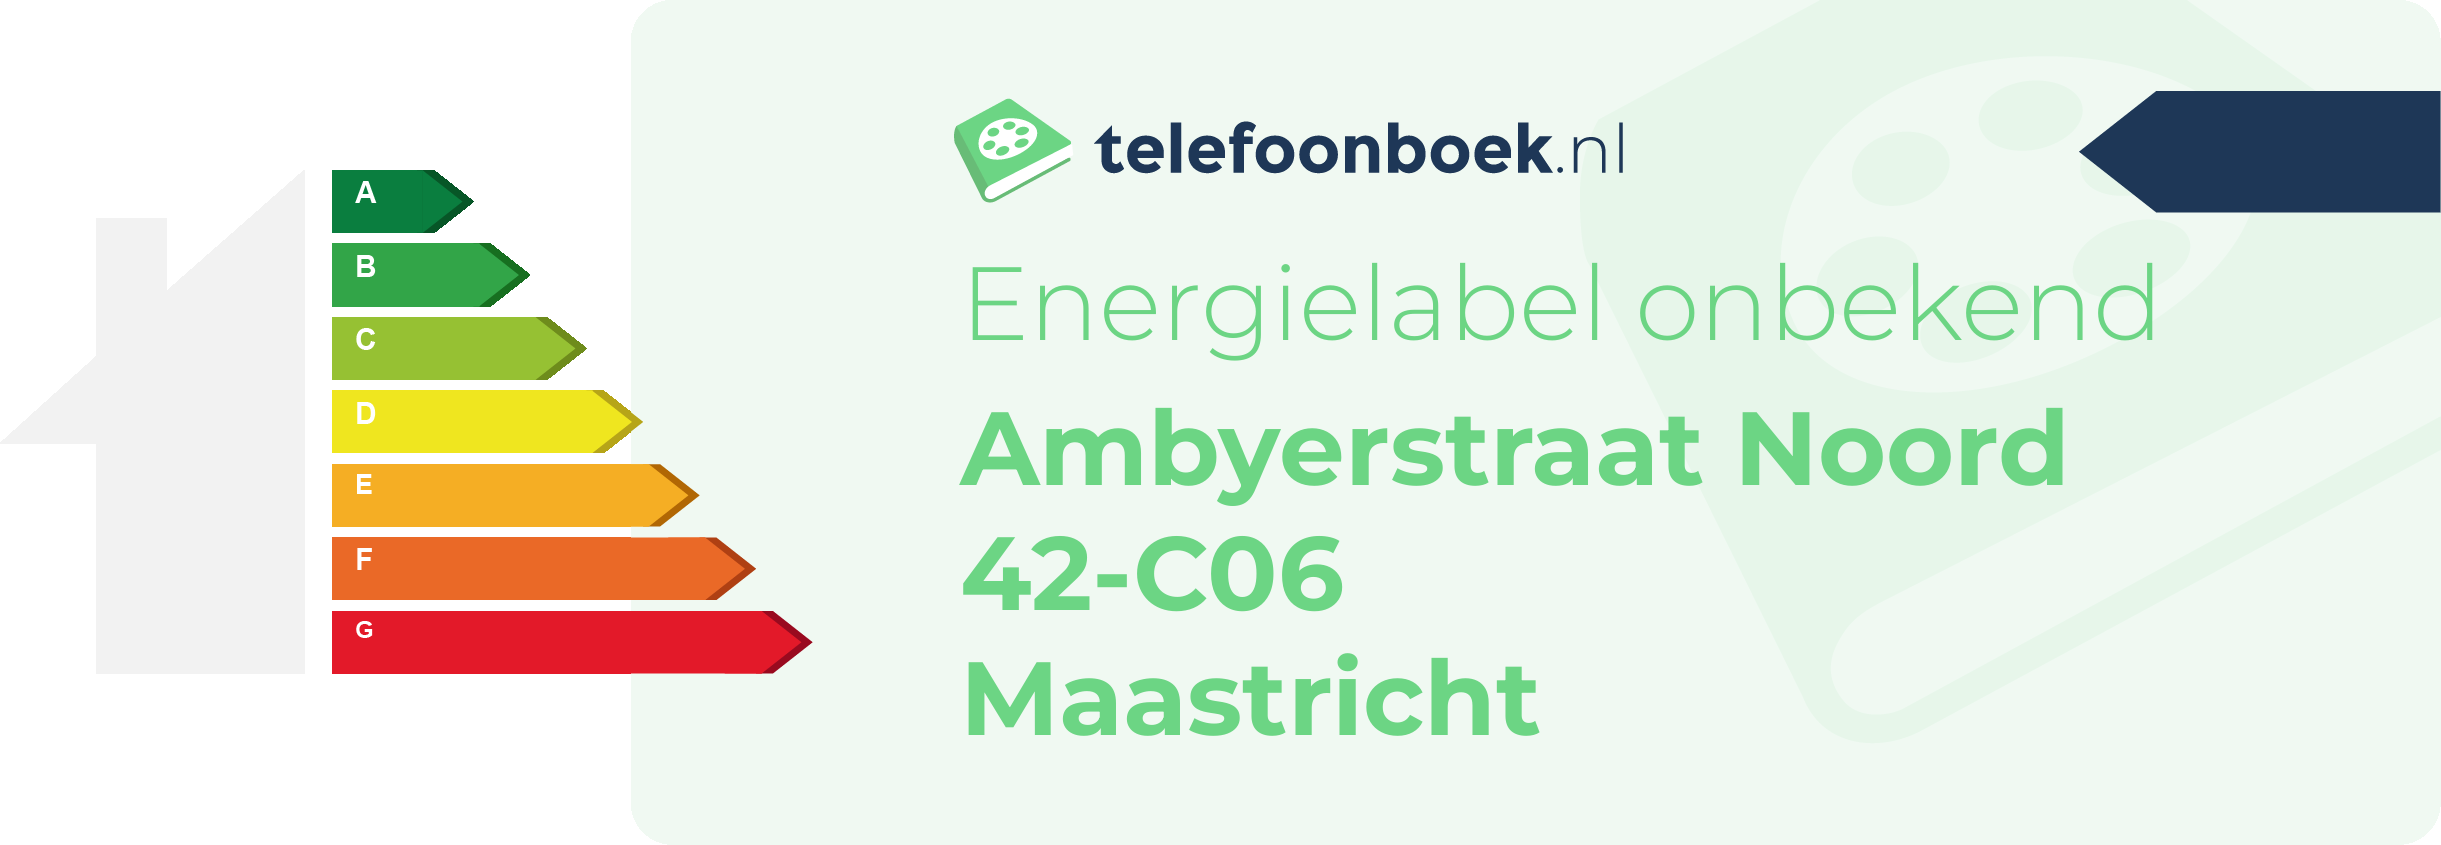 Energielabel Ambyerstraat Noord 42-C06 Maastricht